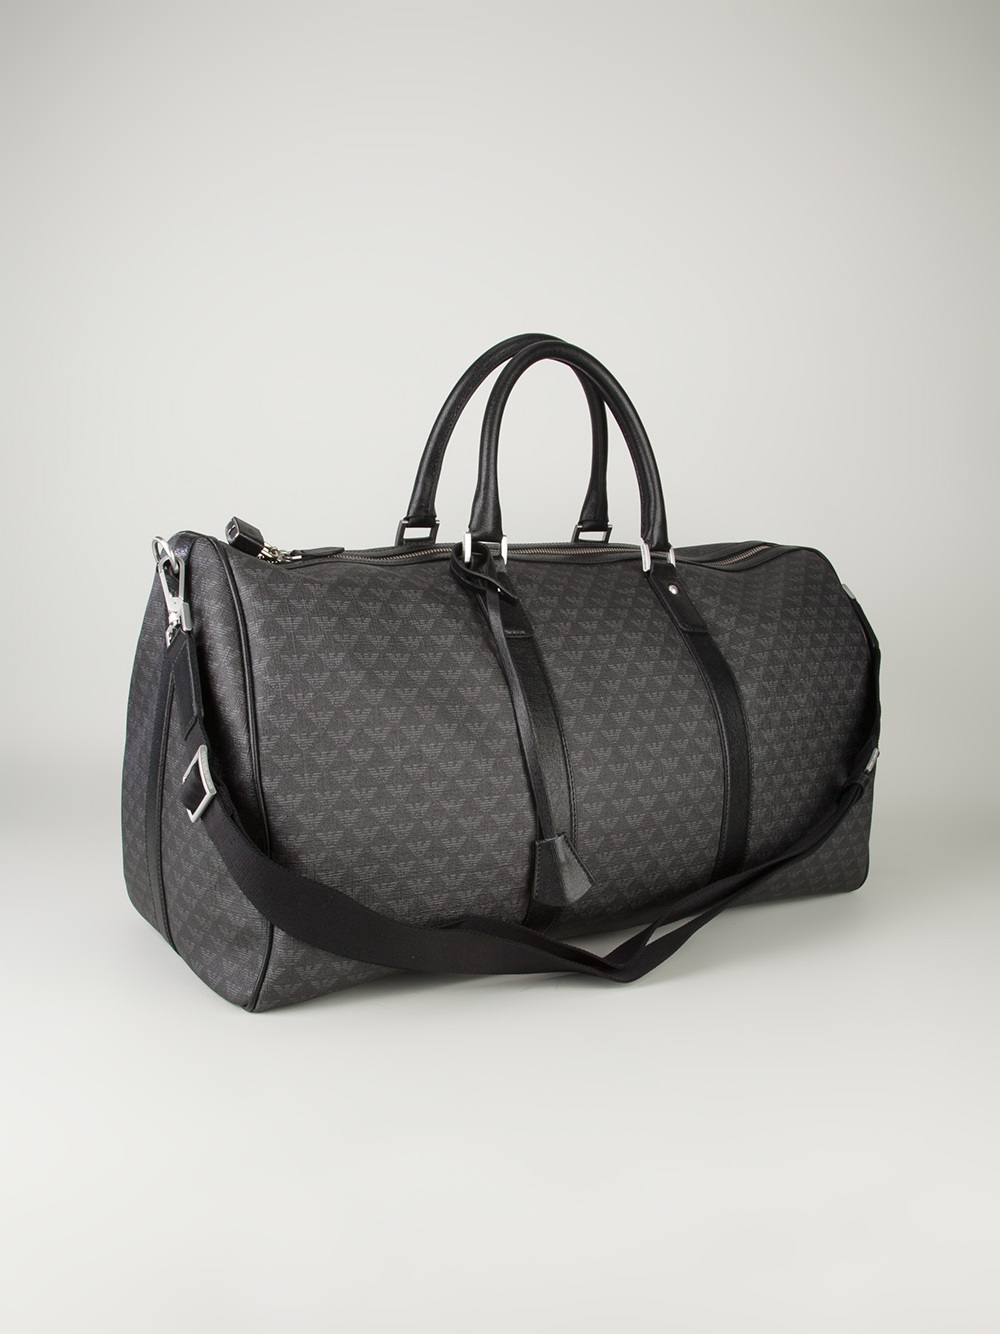 Lyst - Emporio Armani Monogrammed Duffle Bag in Black for Men